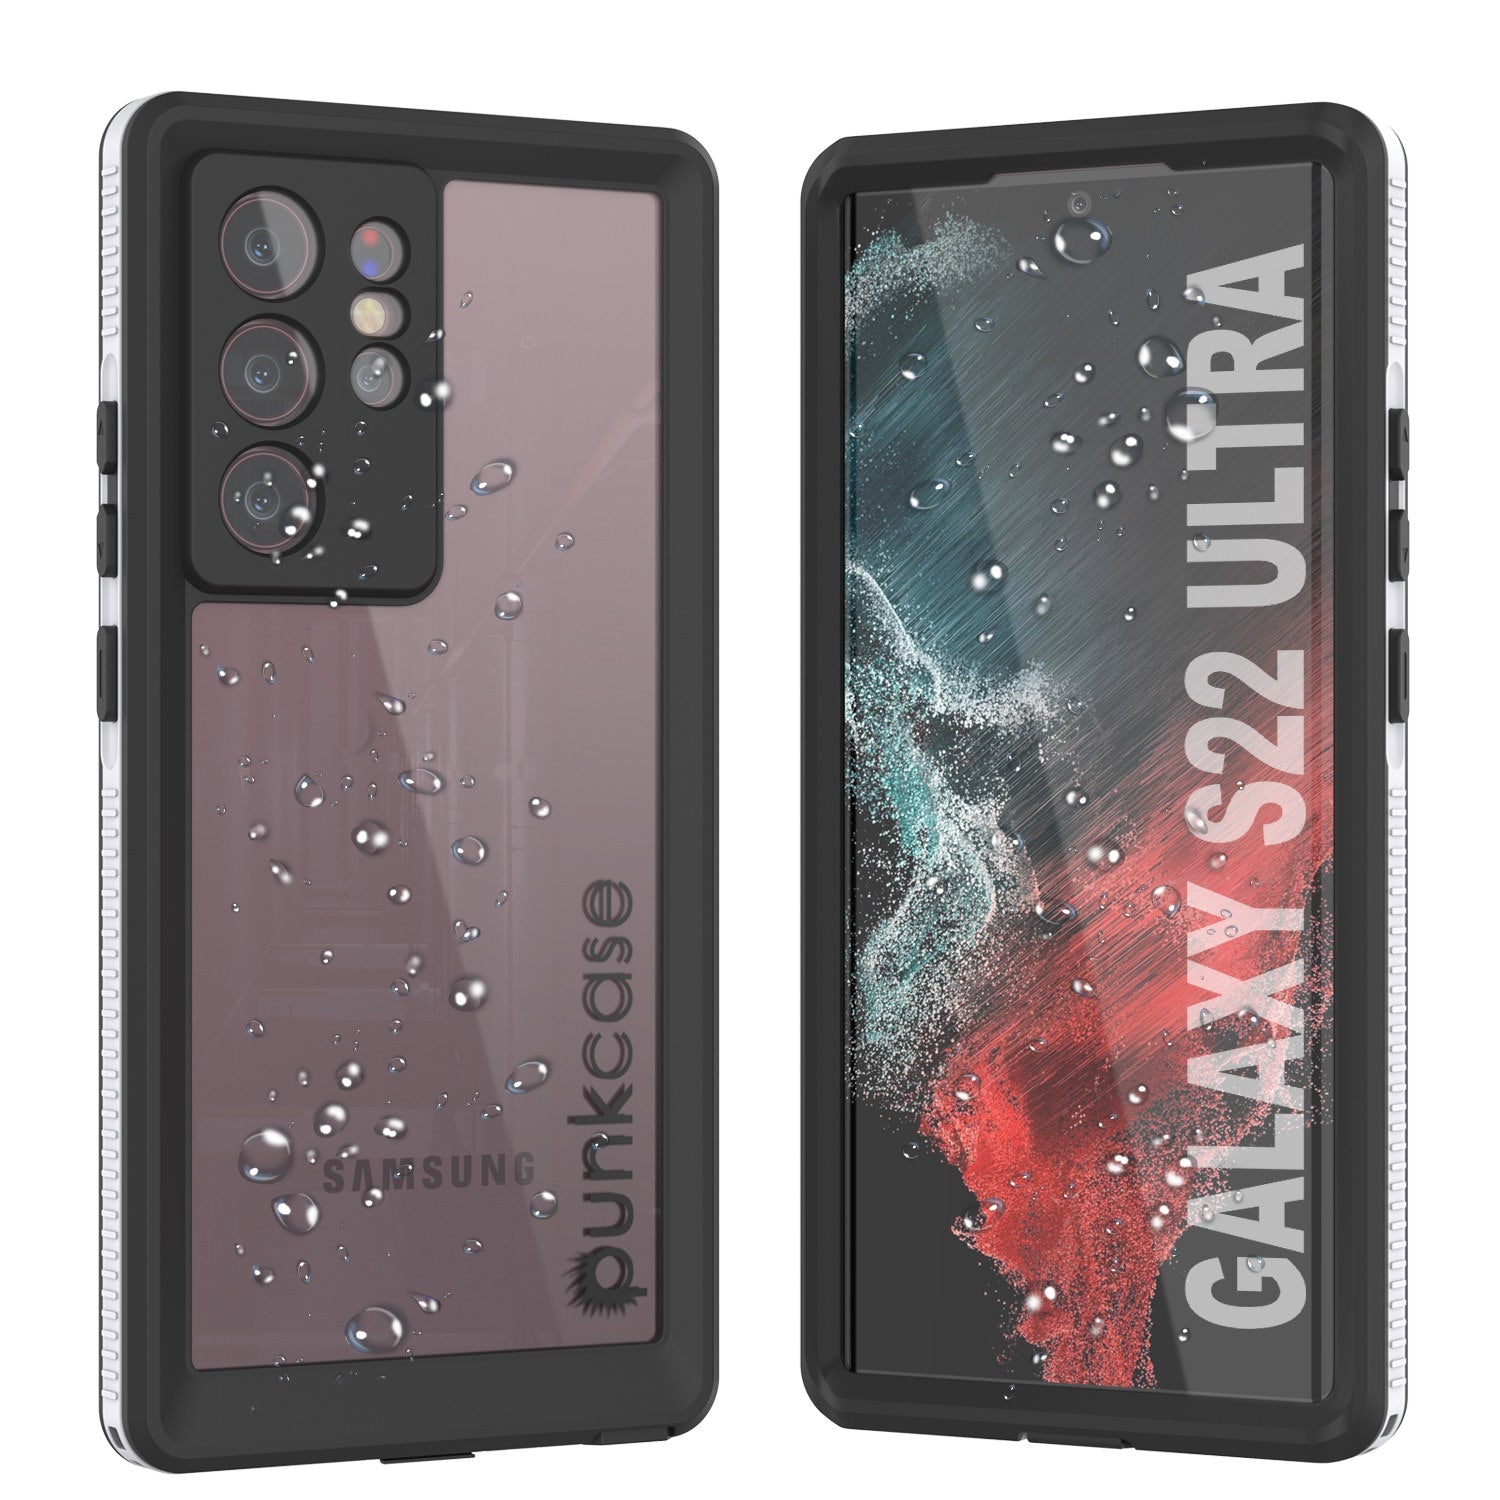 Galaxy S22 Ultra Waterproof Case, Punkcase Ultimato White Thin 6.6ft Underwater IP68 Shock/Snow Proof [White]